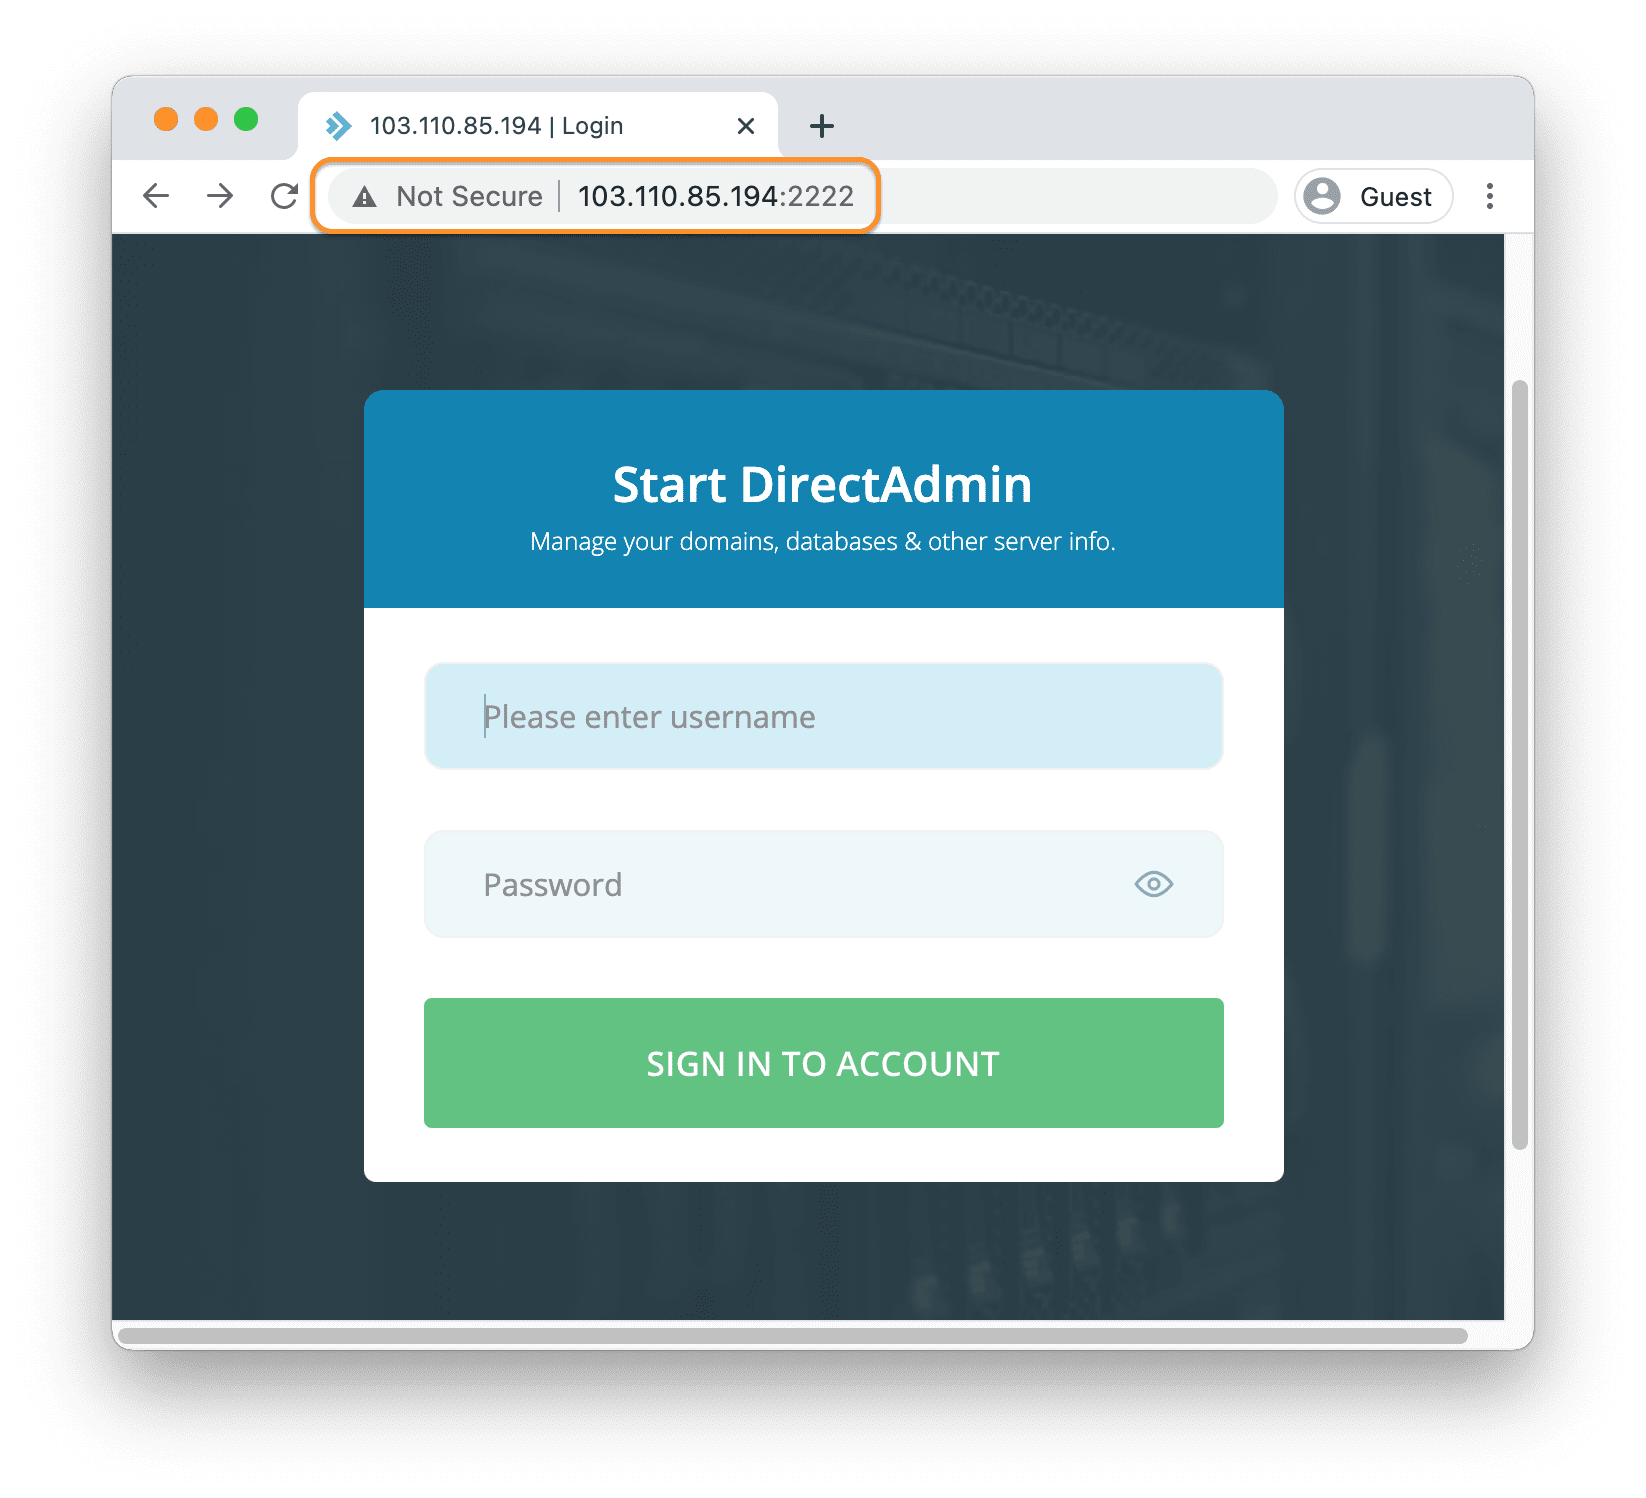 cài đặt SSL cho Hostname DirectAdmin - 
Installing an SSL certificate for your hostname using LetsEncrypt